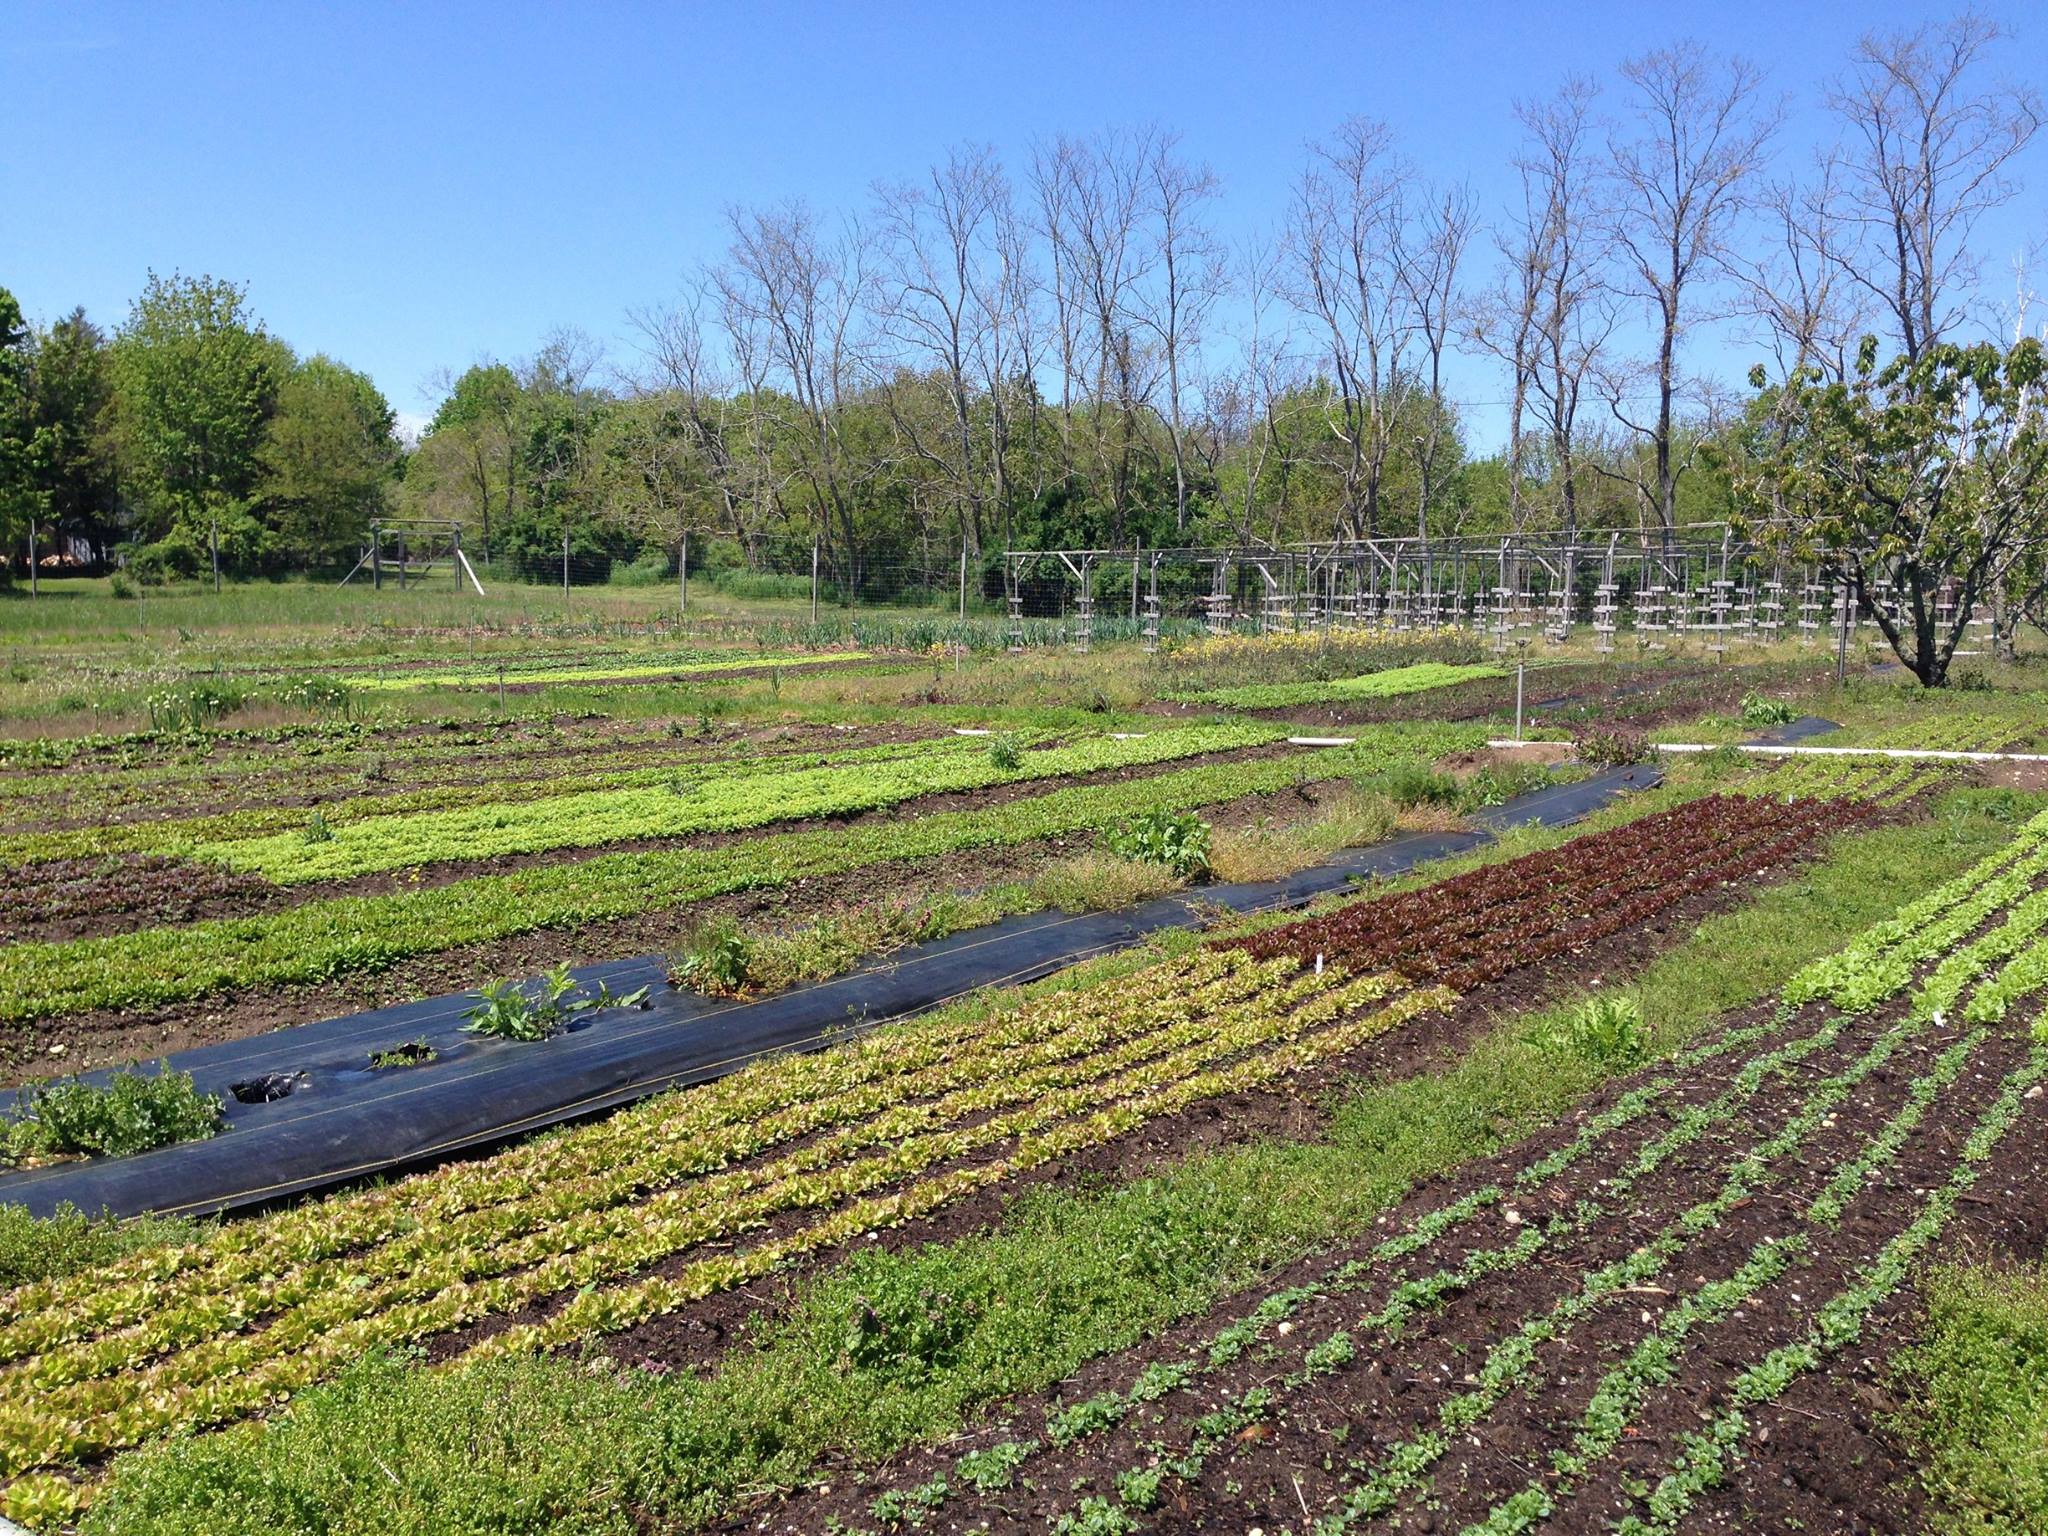 KK’s The Farm and the Biodynamic Agriculture